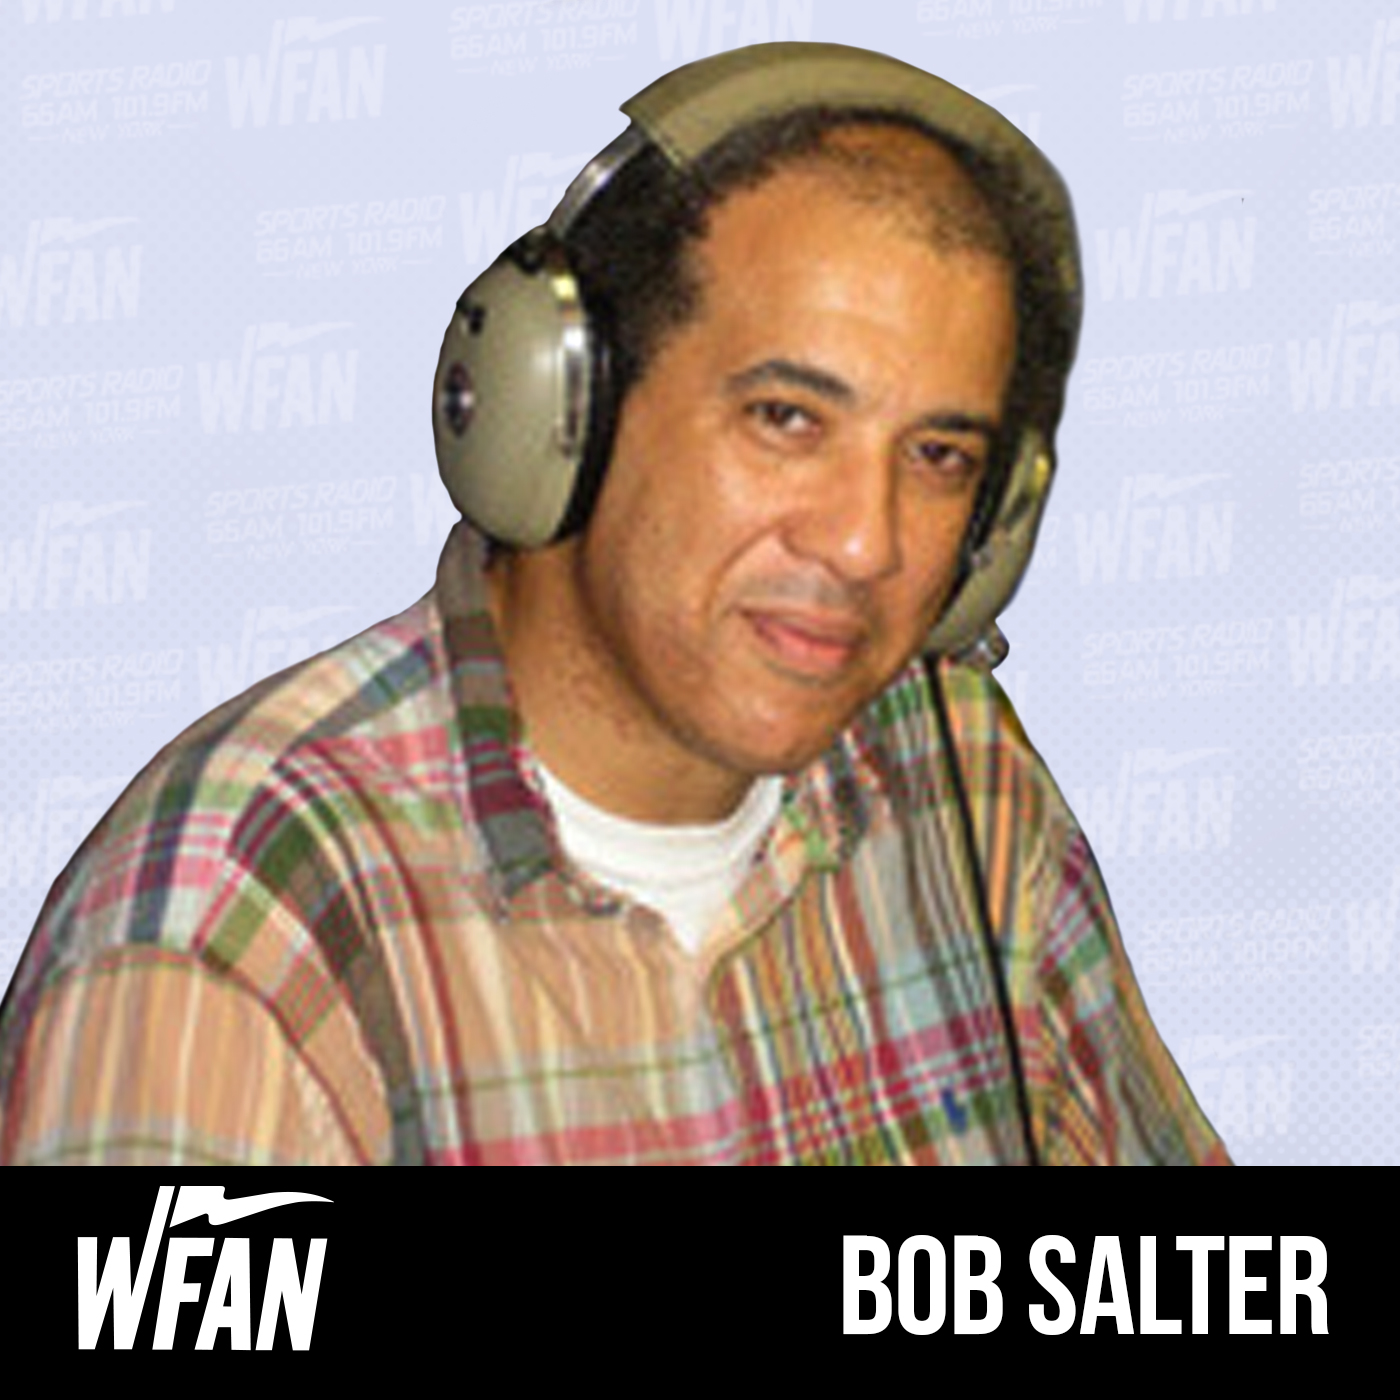 Bob Salter PSA Program Hour 1